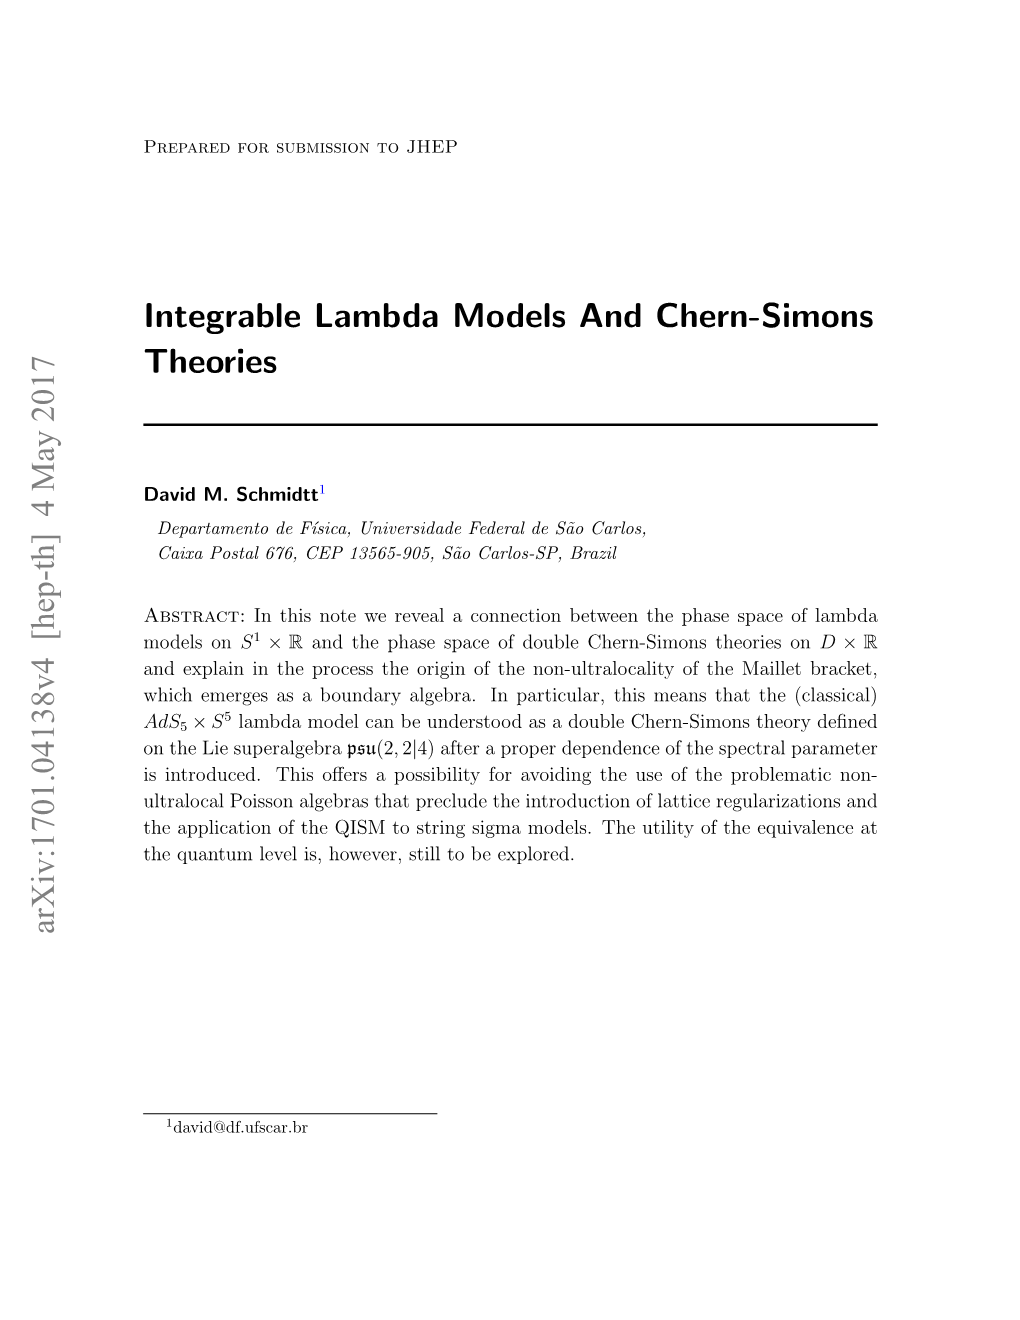 Integrable Lambda Models and Chern-Simons Theories Arxiv